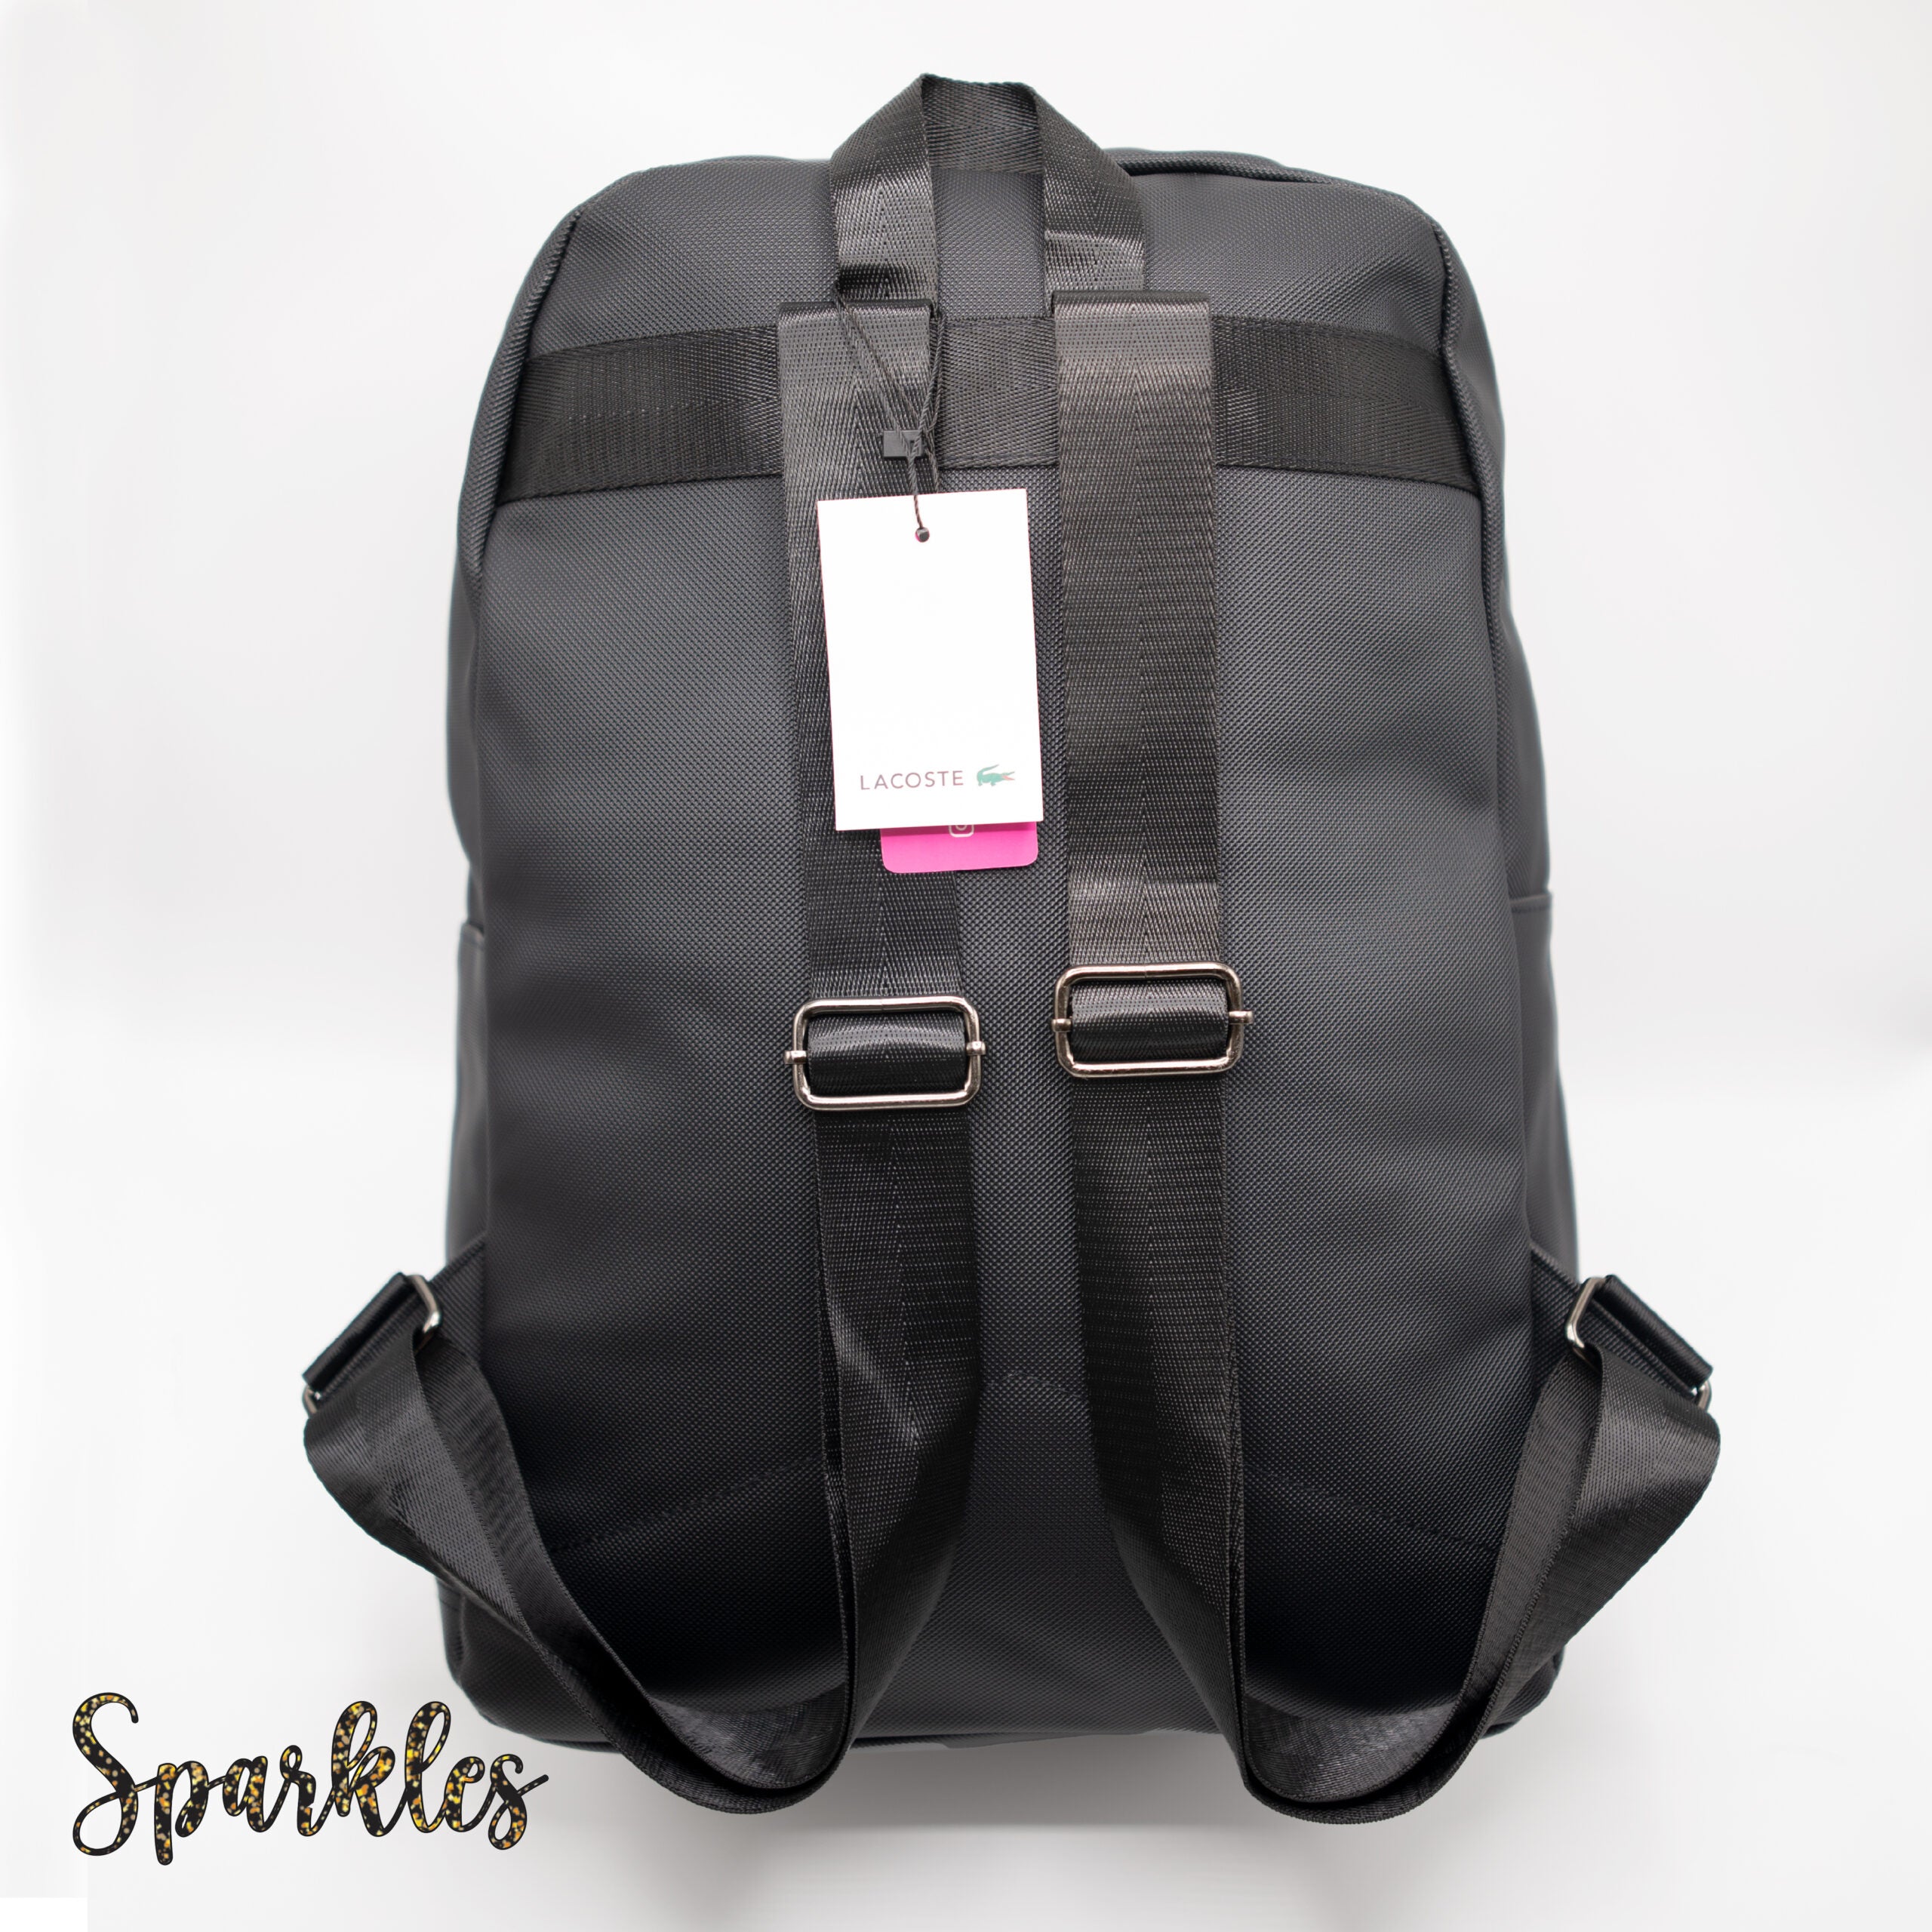 Lacoste Backpack Online - Sparkles